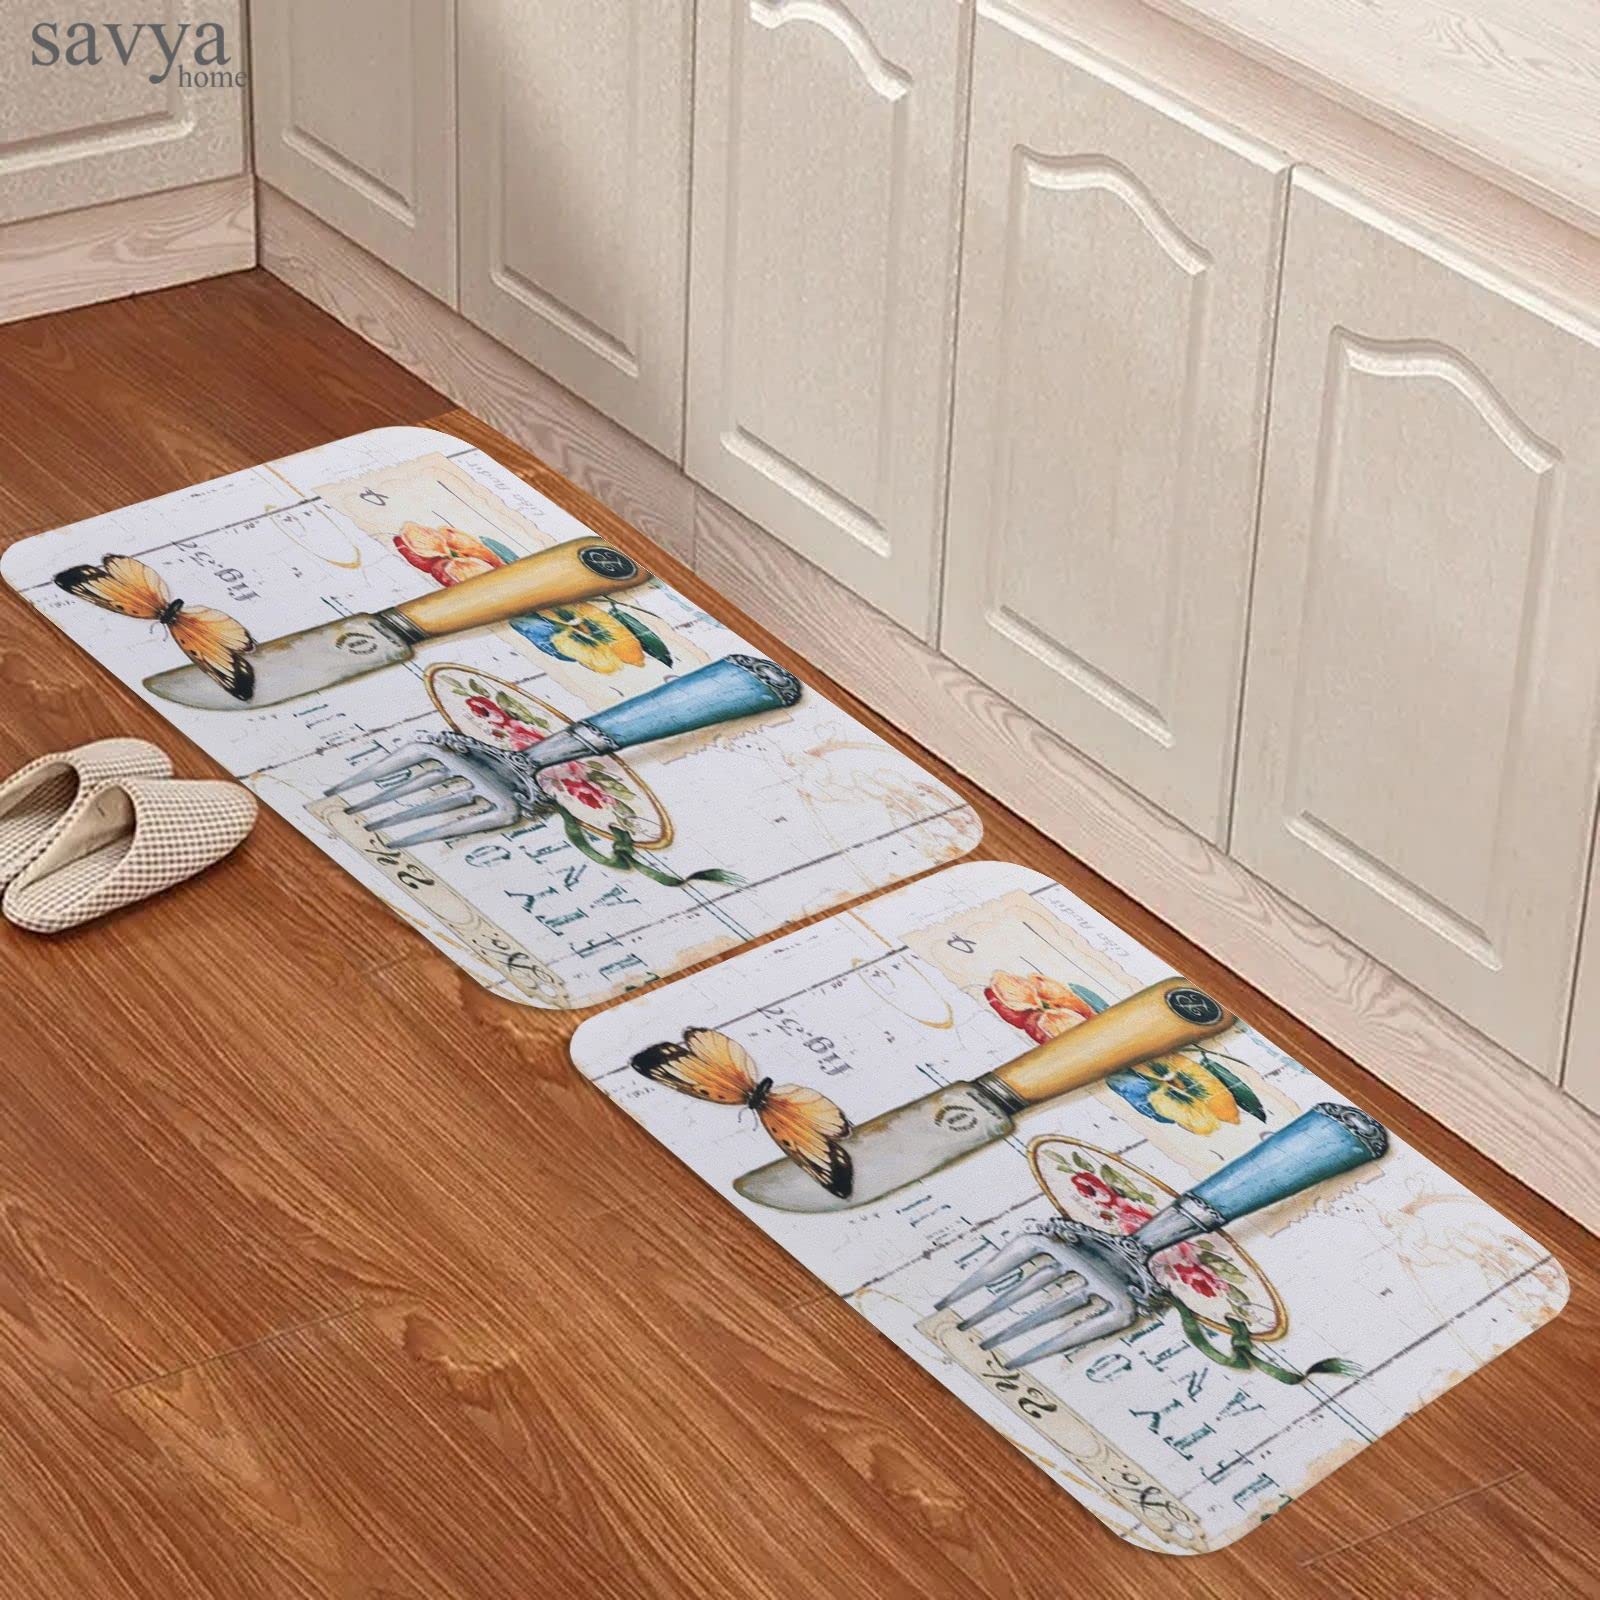 SAVYA HOME Kitchen Mats|| 60 x 40 ||Anti-Skid Mat for Living Room,Bathroom,Shower,Bathtub mat,Multipurpose Mat (Blue & Yellow)